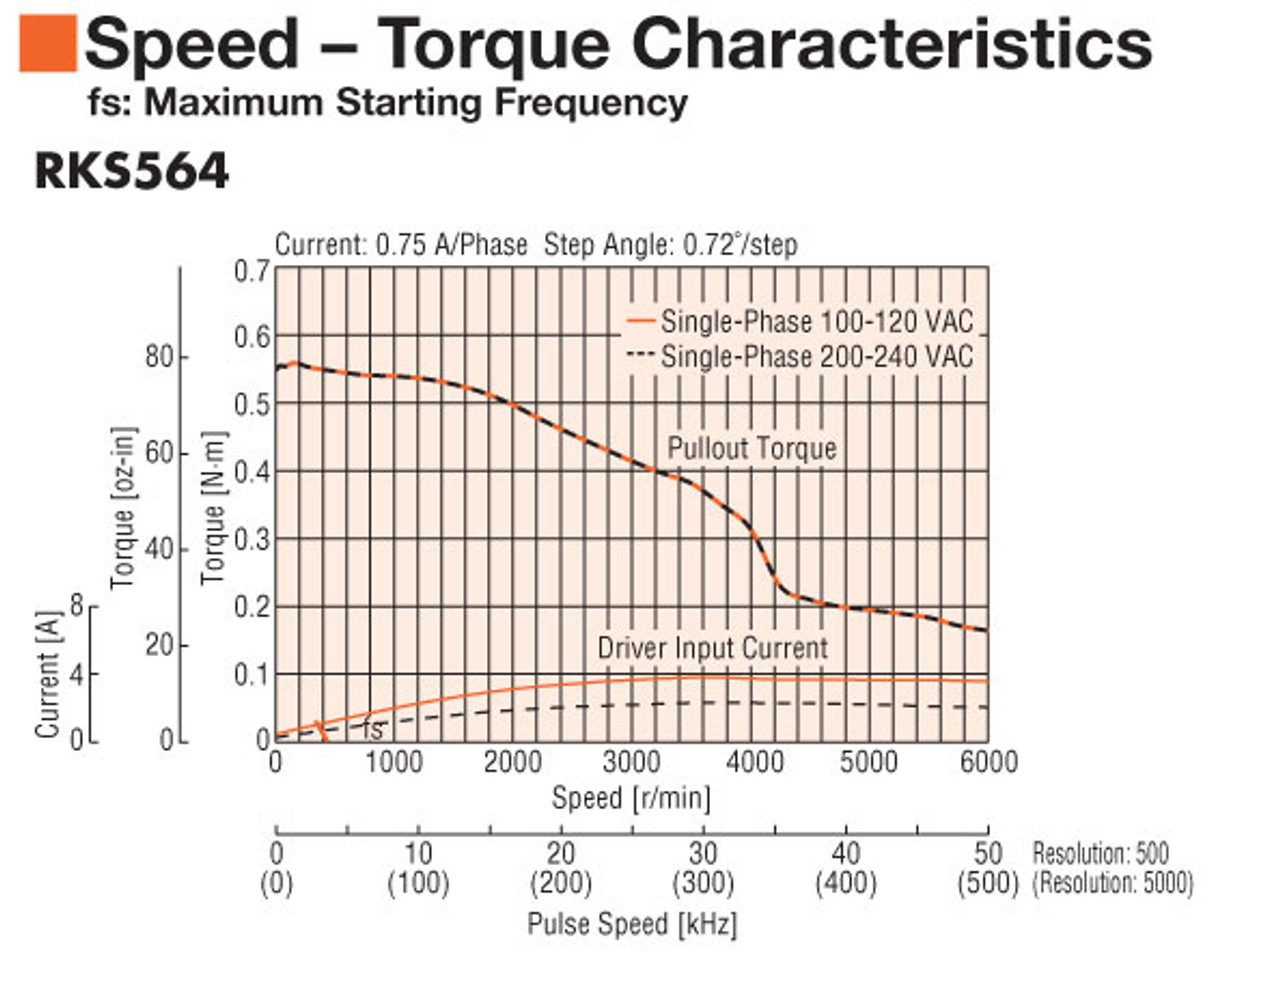 PKE564MC - Speed-Torque